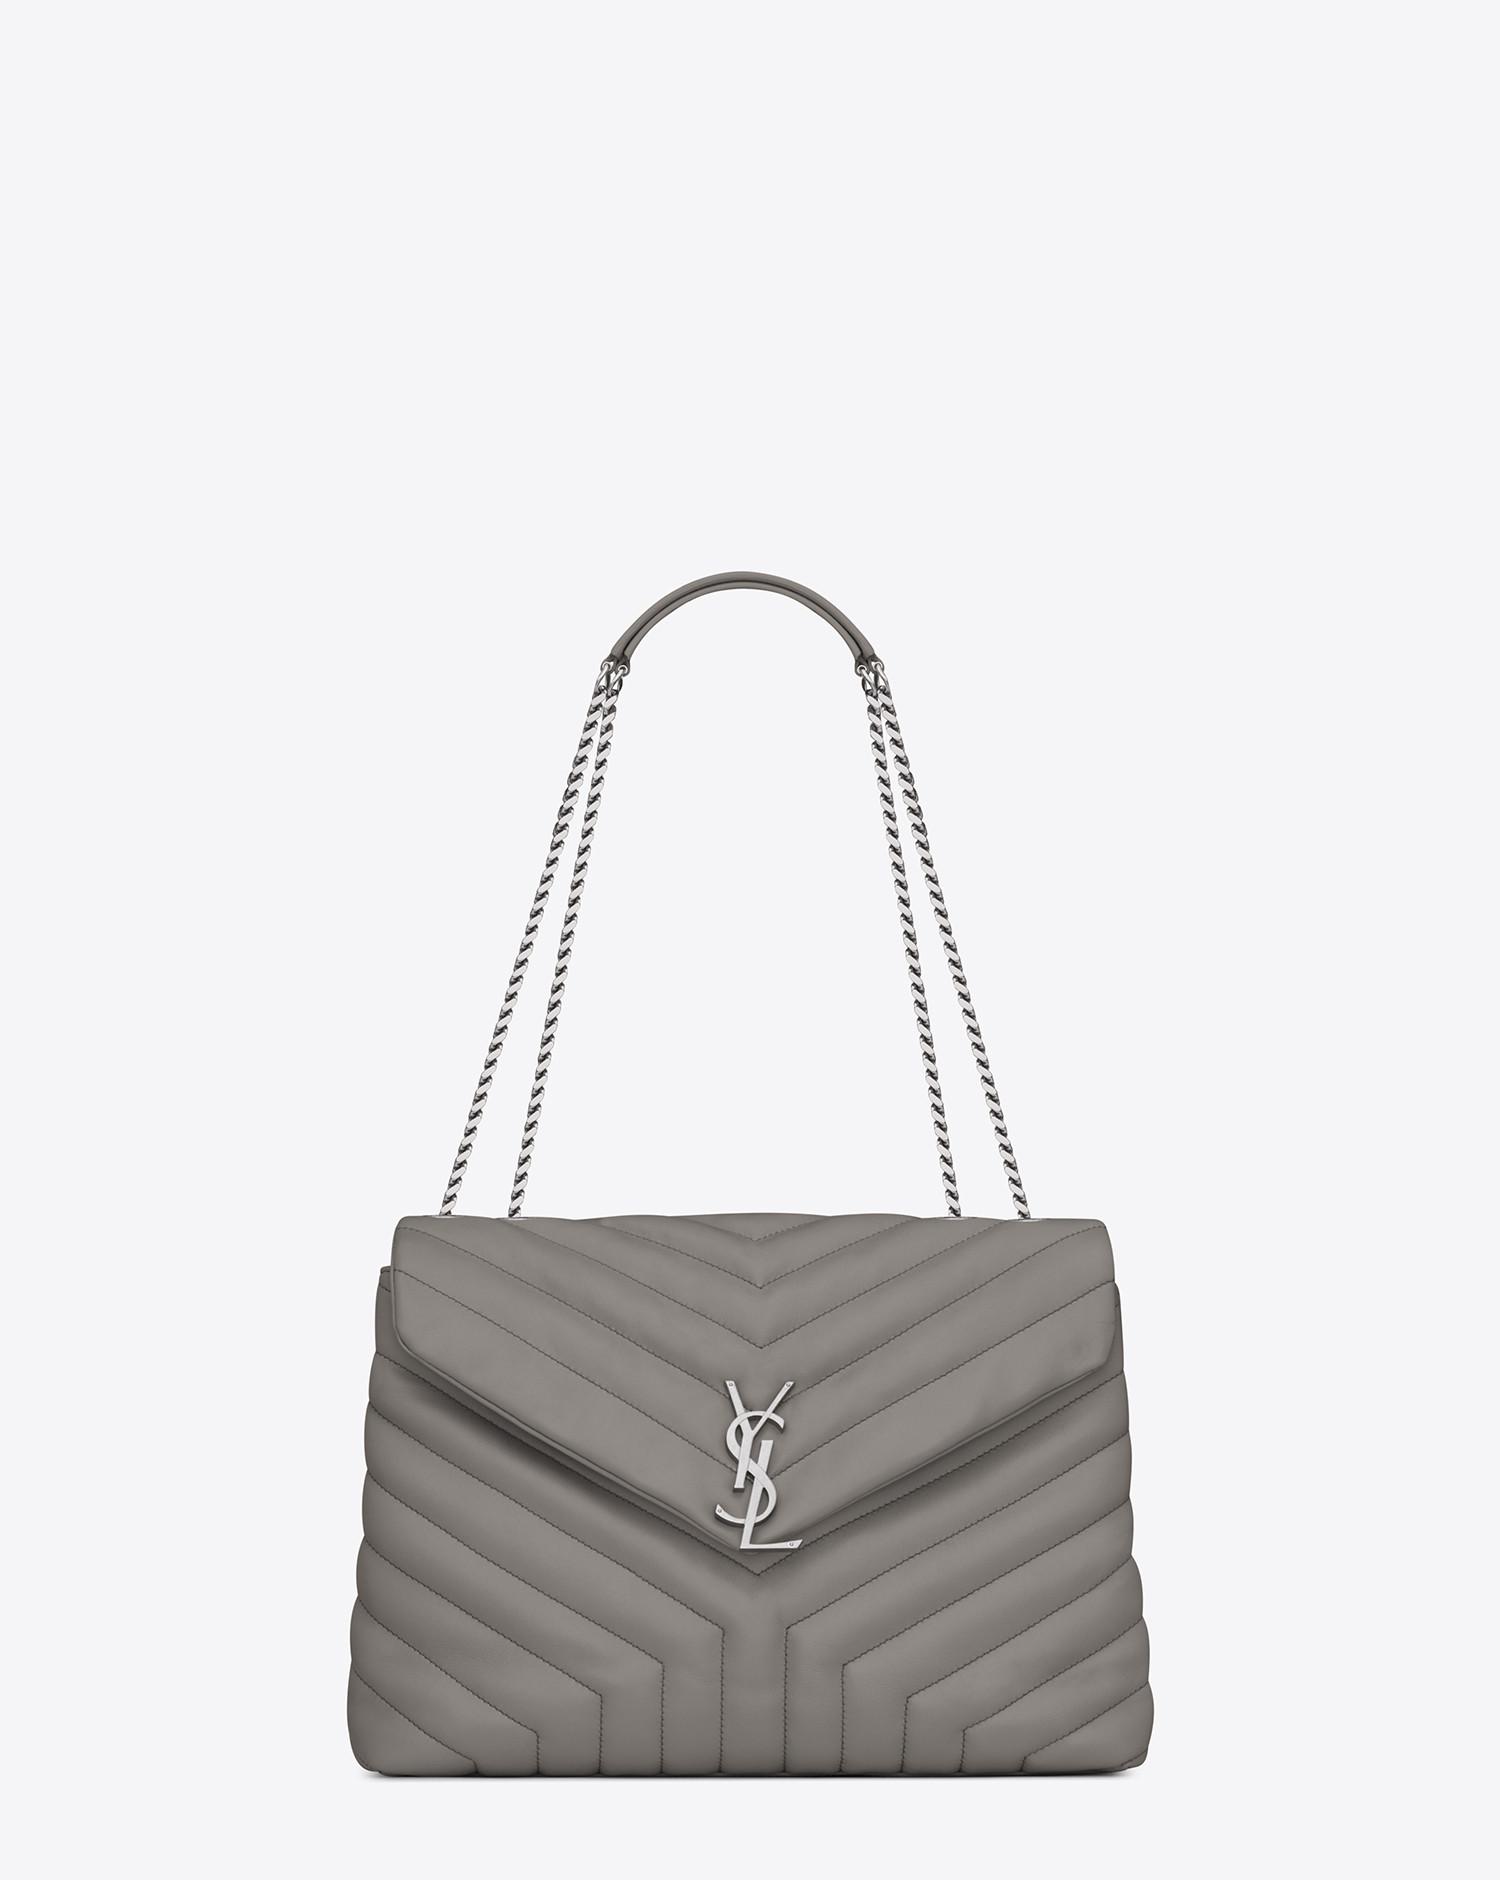 Saint Laurent - Loulou Gray Brown Leather Medium Shoulder Bag